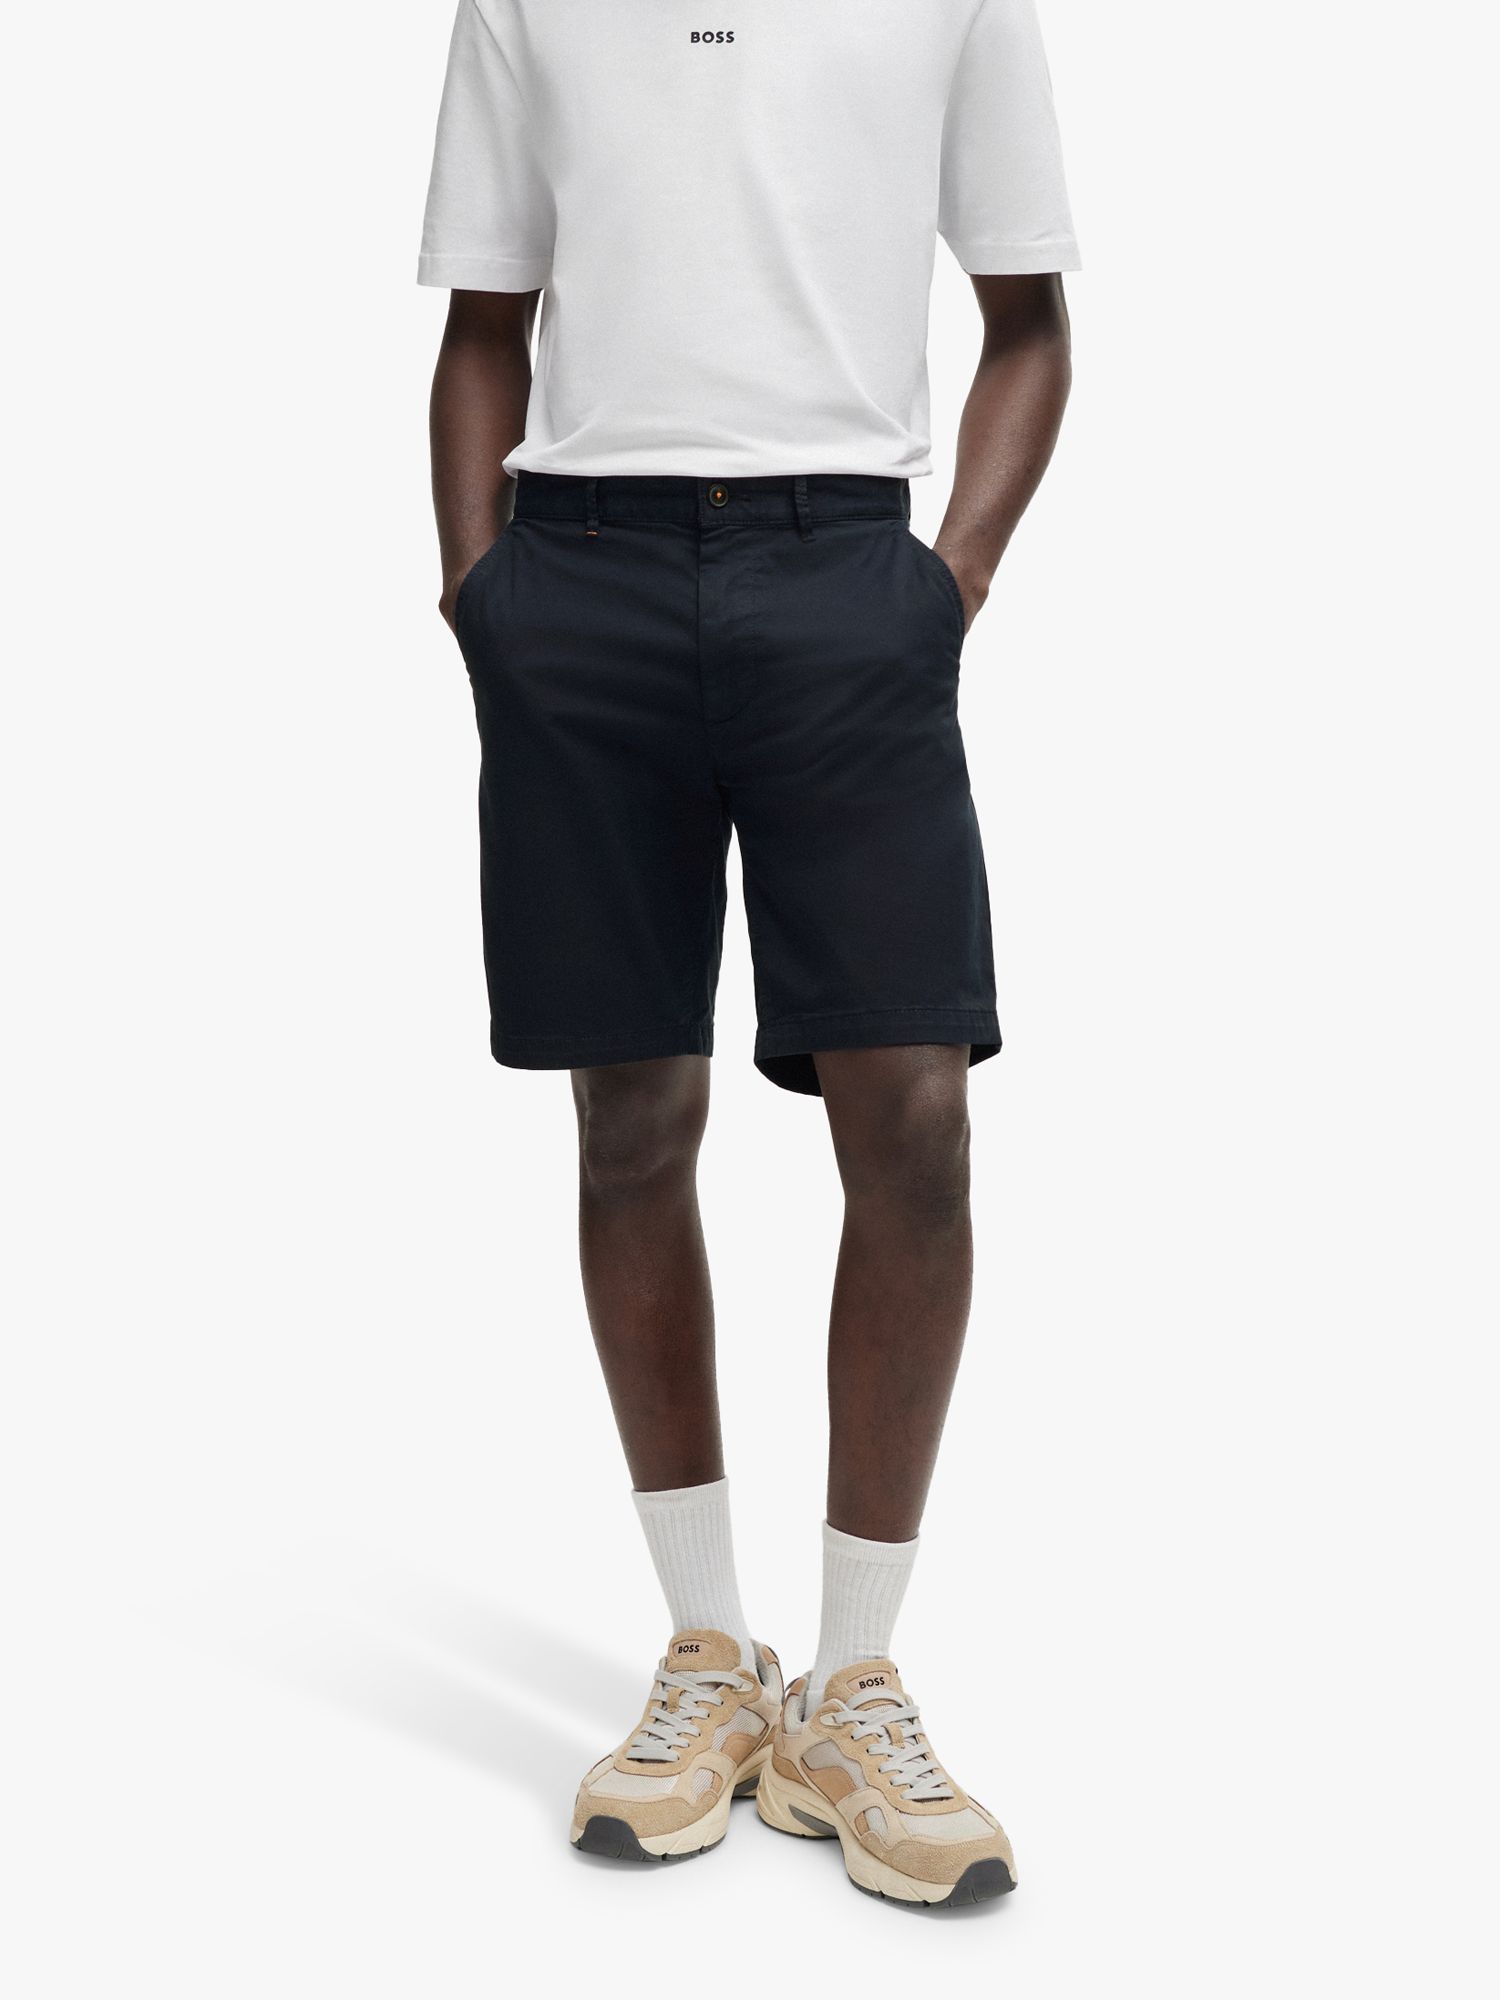 BOSS Slim Fit Chino Shorts, Navy, 29